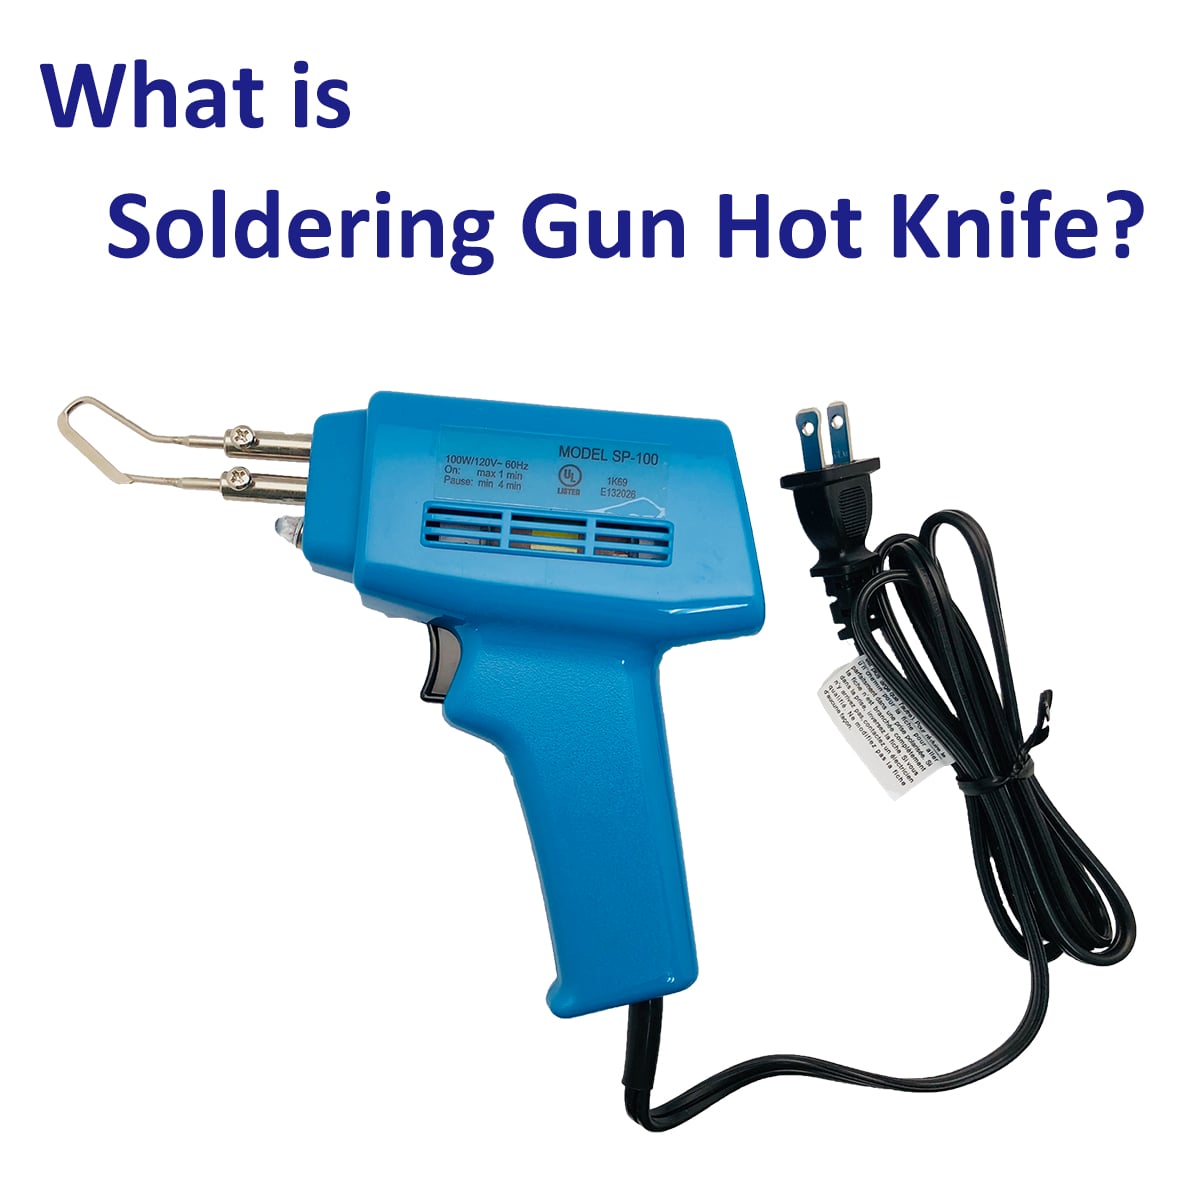 What is Soldering Gun Hot Knife?